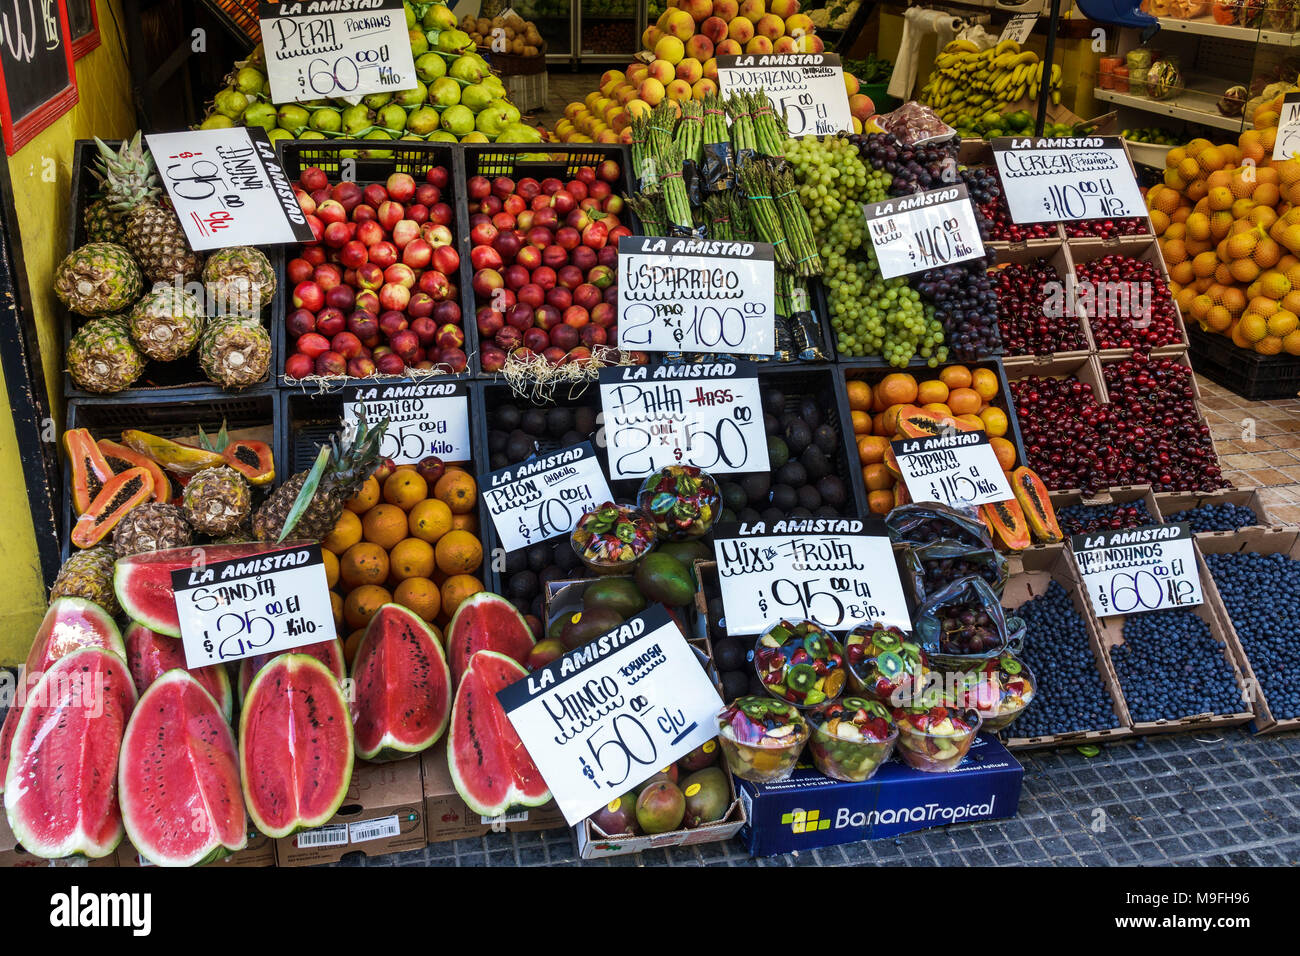 Buenos Aires Argentina,Belgrano,produce fruit market,Spanish language sign,kilo,Kg,display,melon,nectarines,pears,oranges,papaya,cherries,plums,Hispan Stock Photo